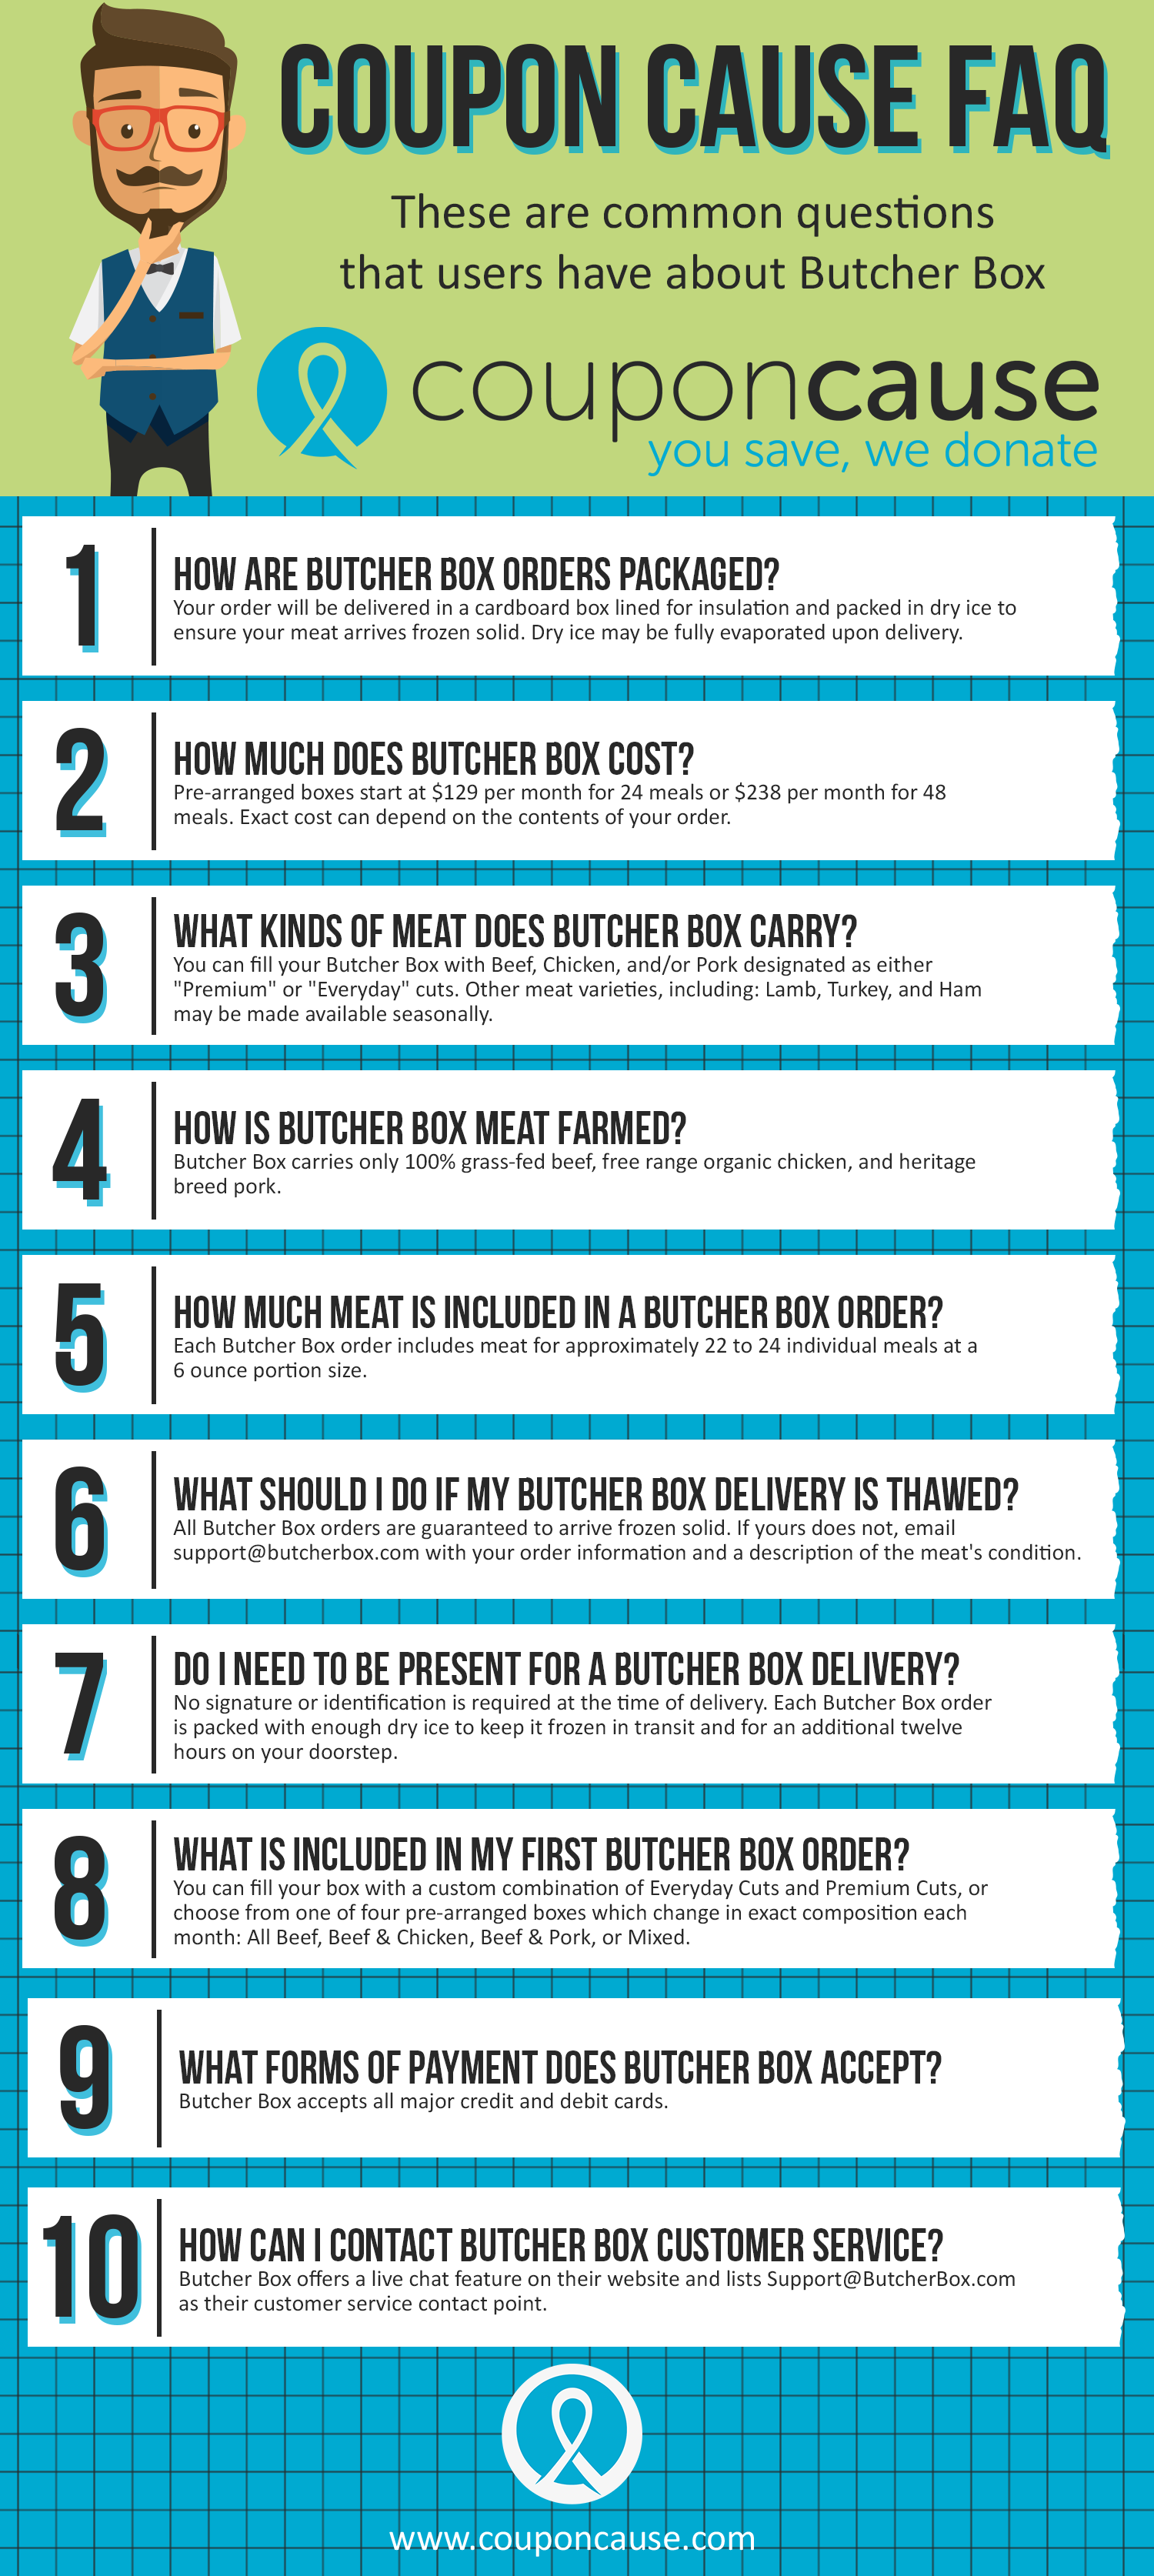 Butcher Box Coupon Cause FAQ (C.C. FAQ) [INFOGRAPHIC]